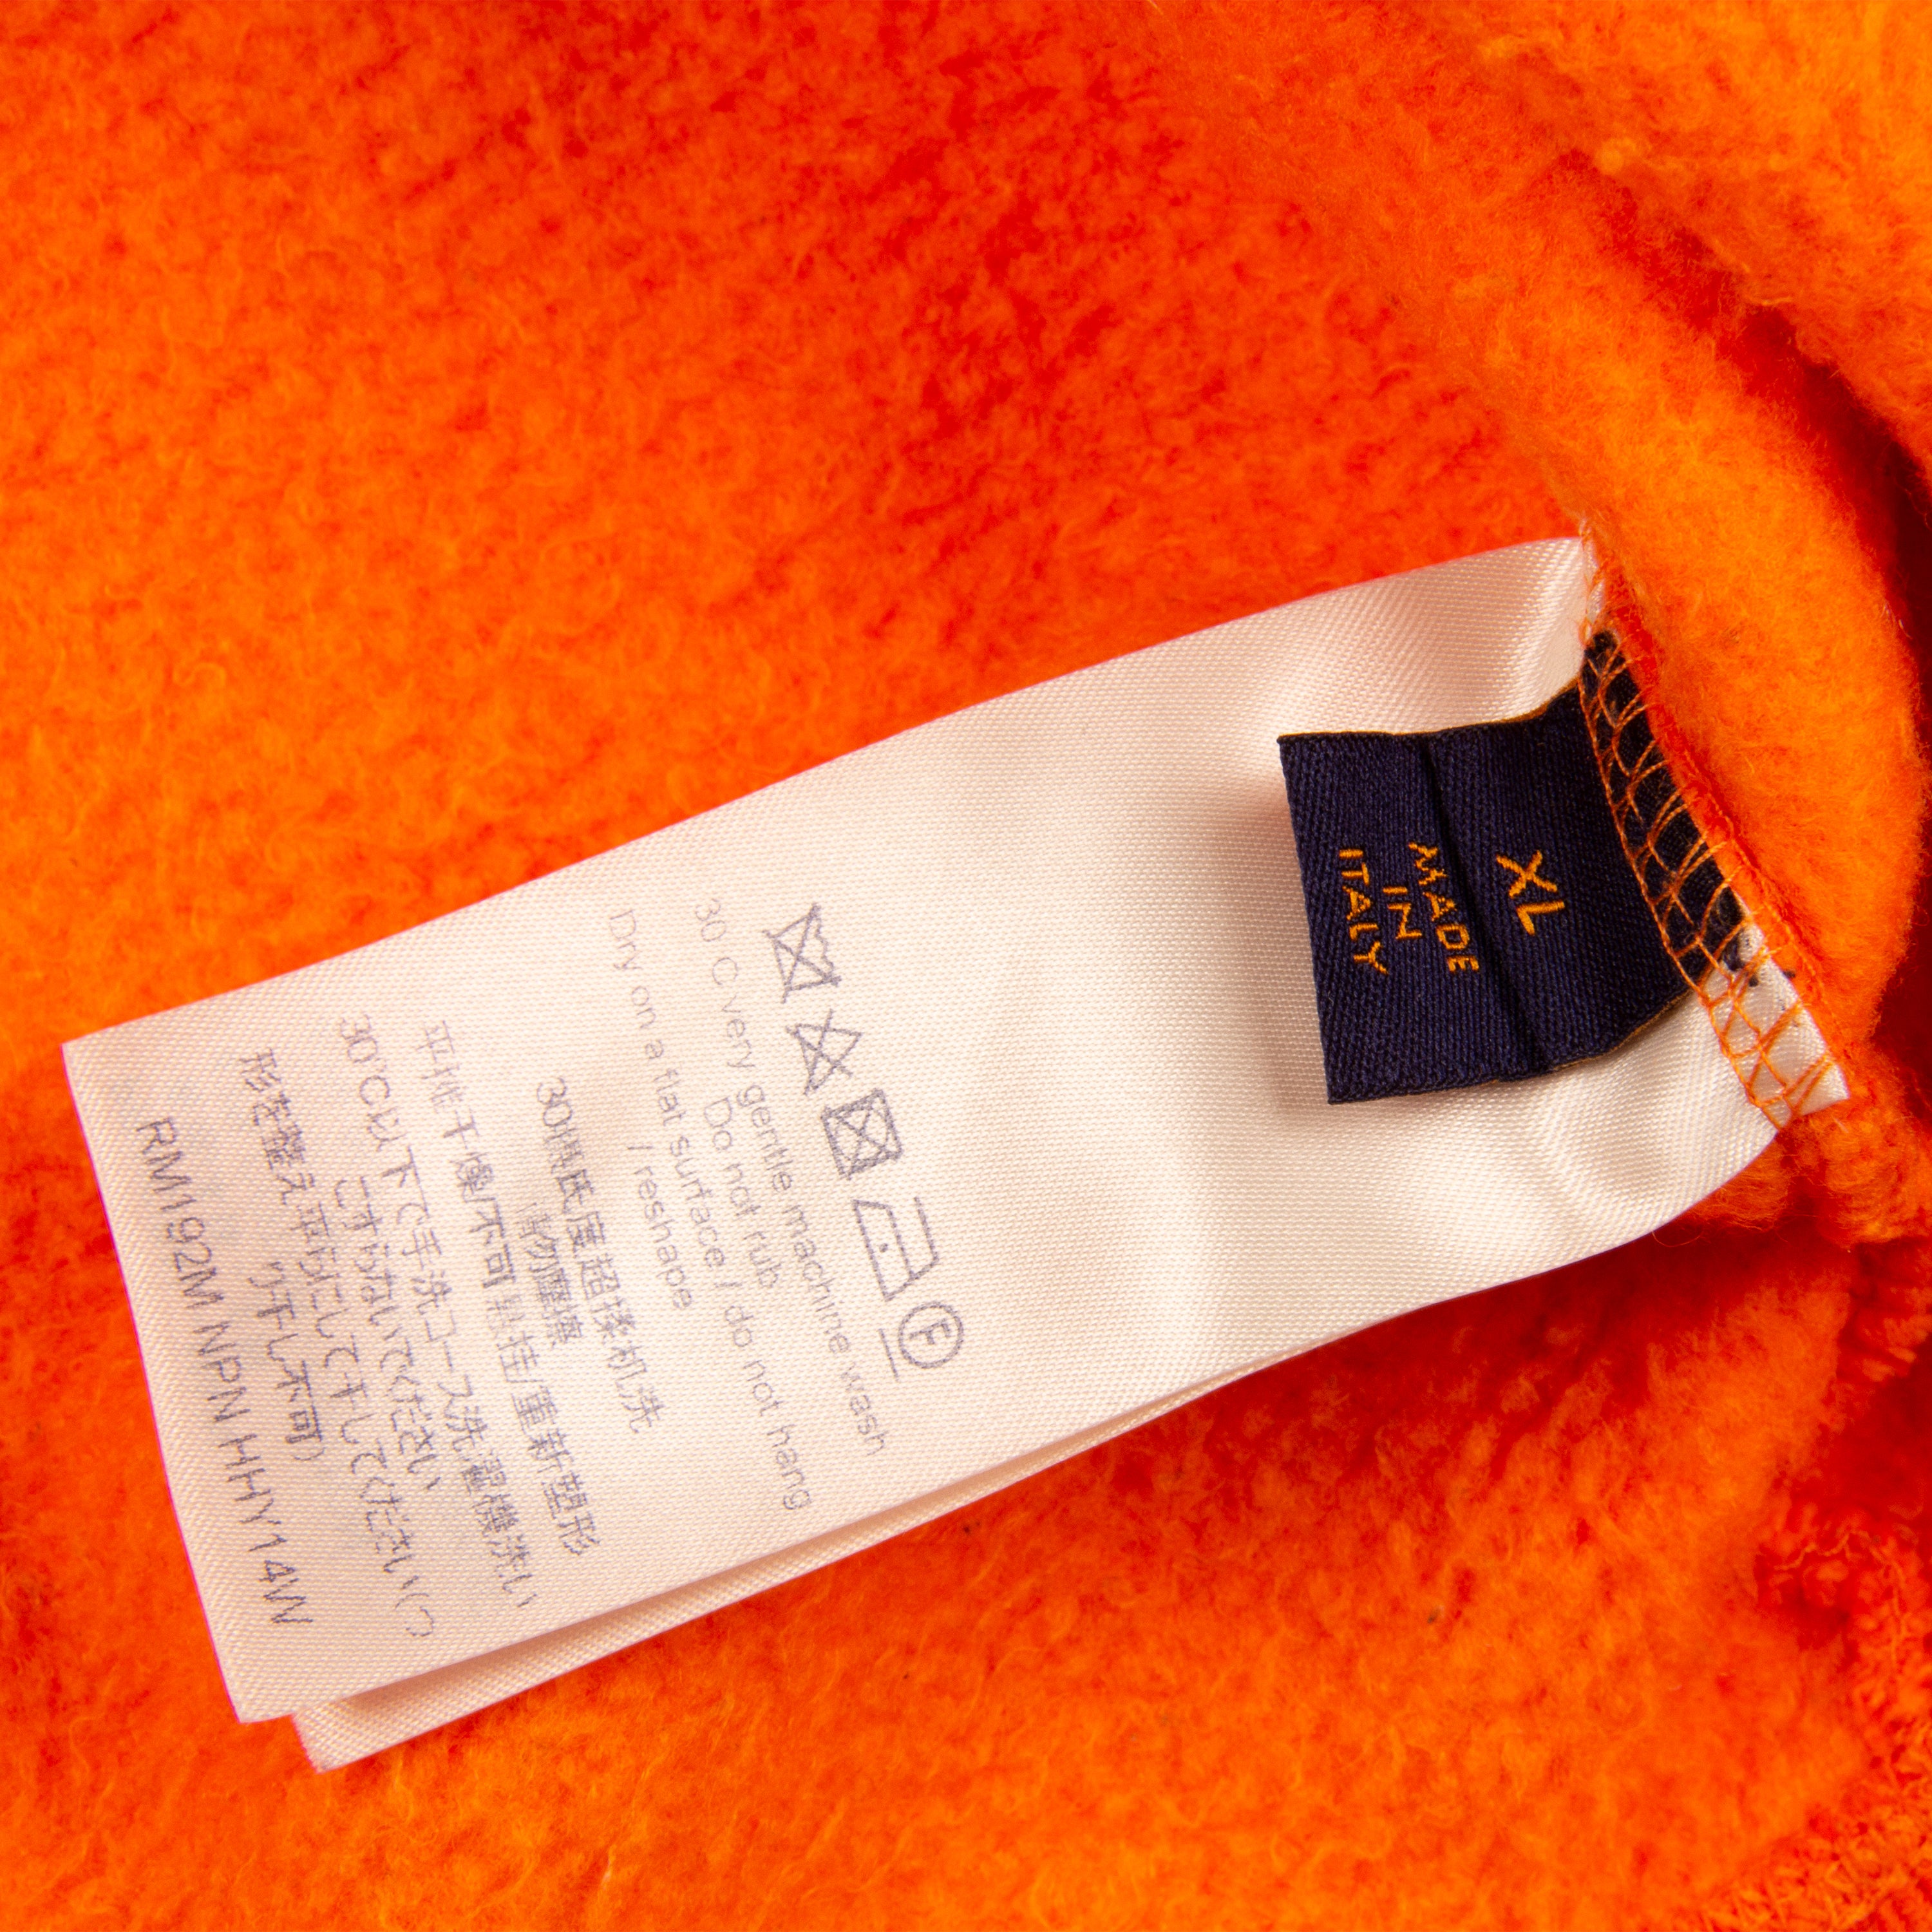 Totême Knit Monogram Sweater - Orange